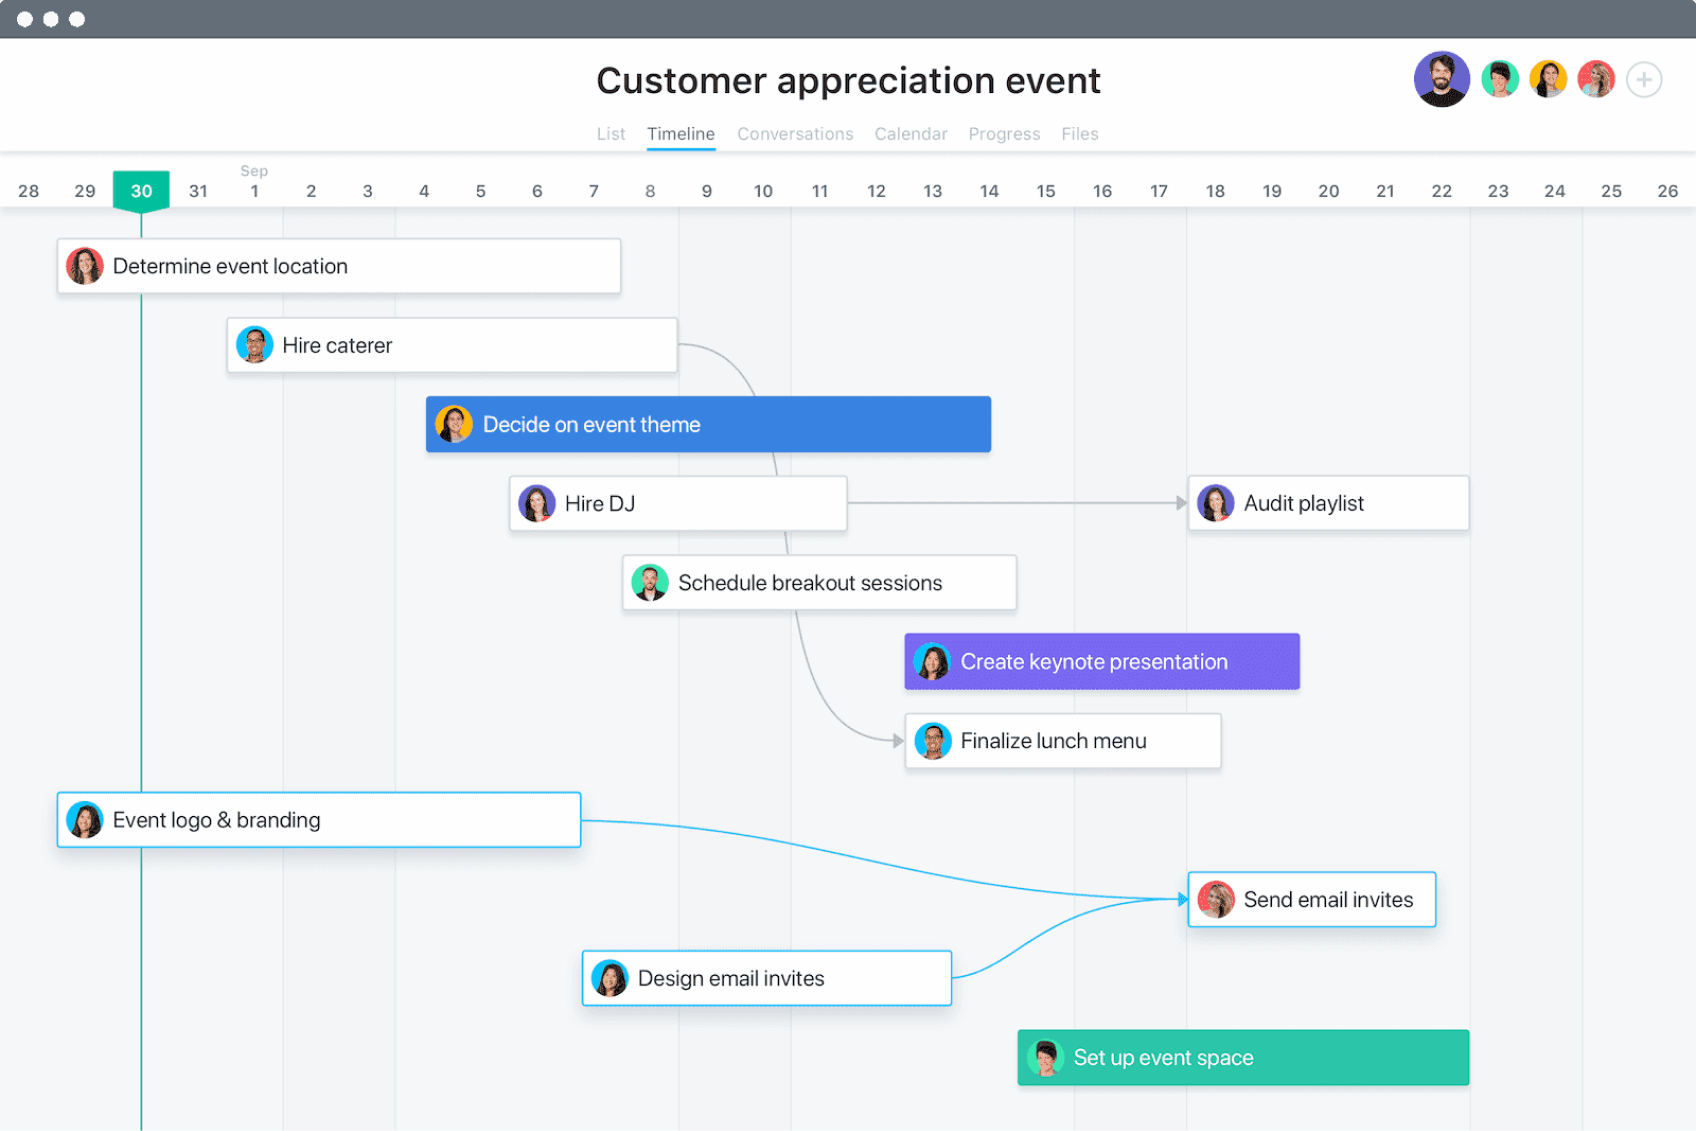 [Product UI] Customer appreciation event project in Asana (Timeline)